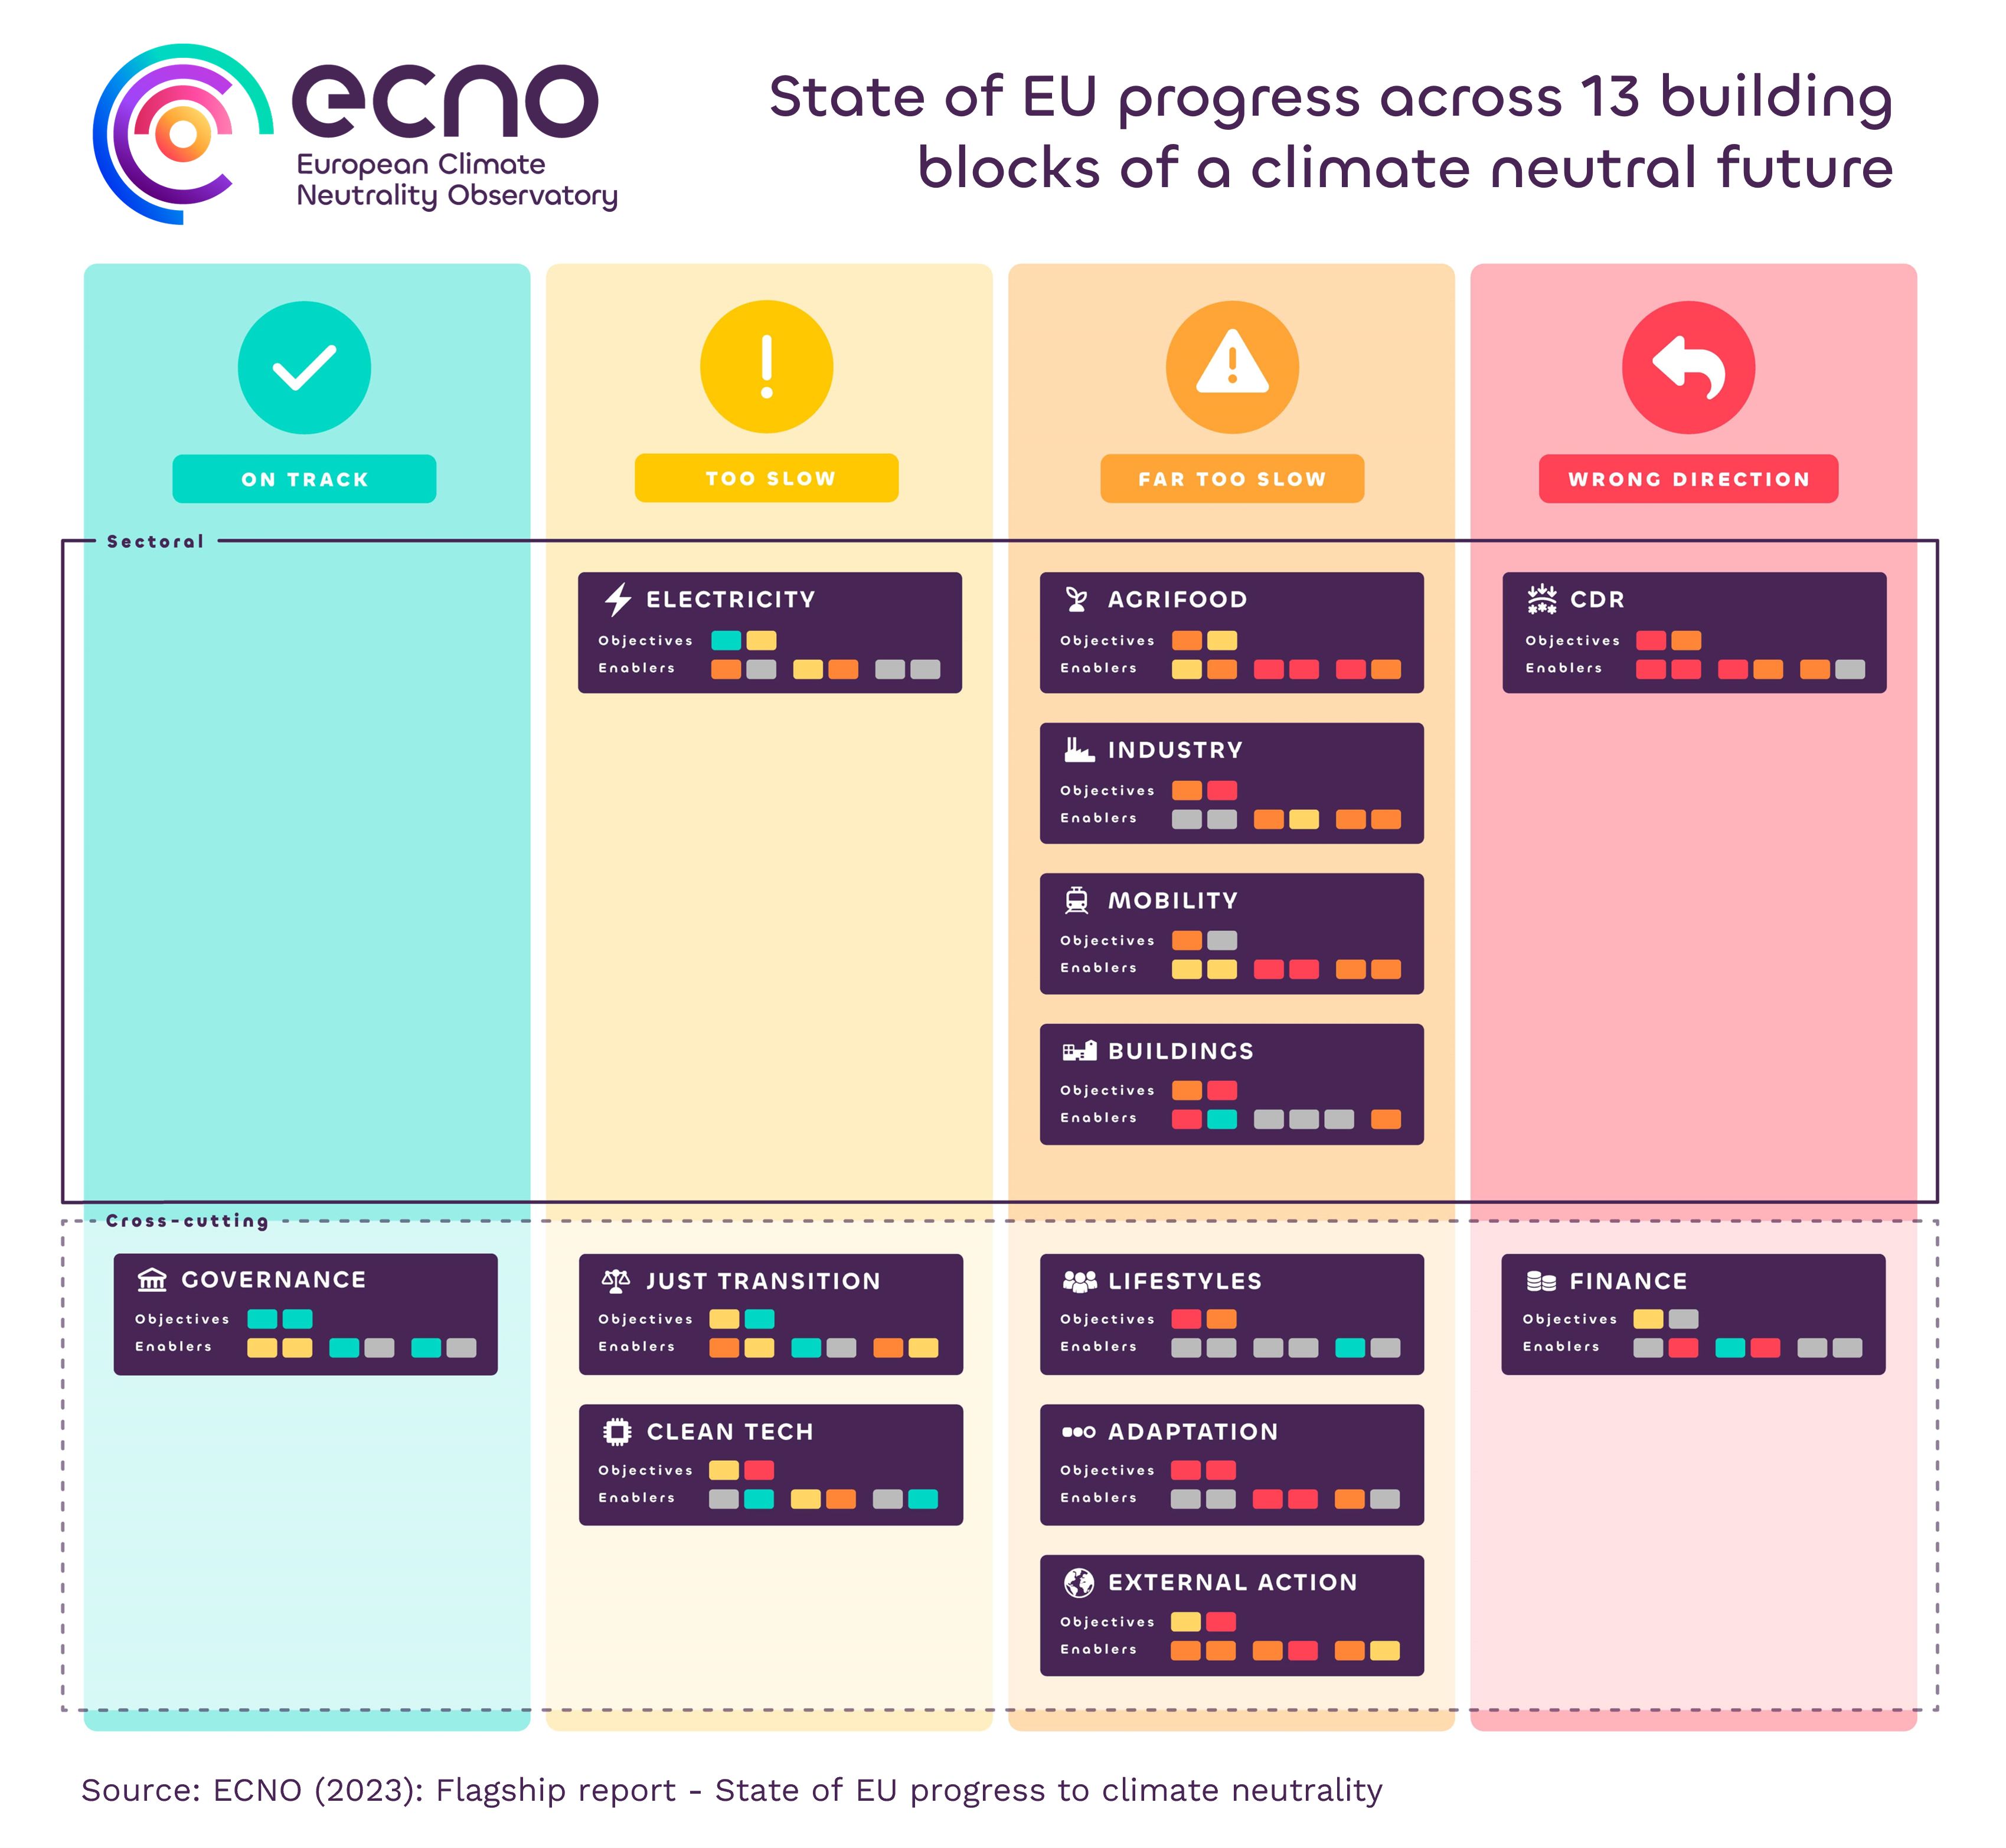 ECNO main results across 13 building blocks